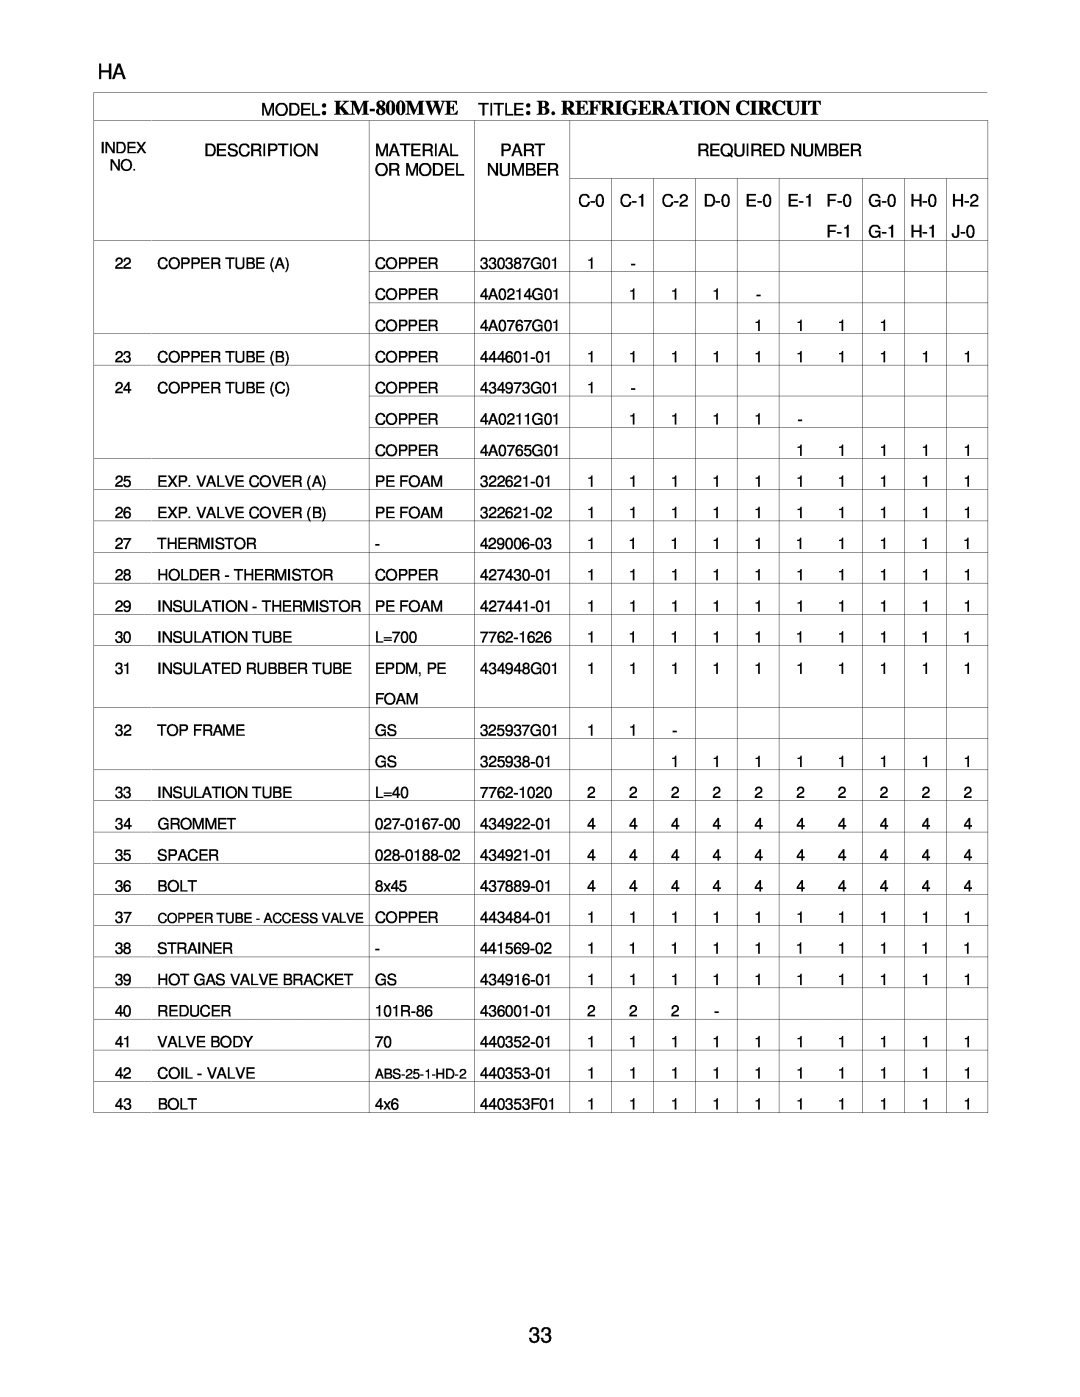 Hoshizaki manual MODEL: KM-800MWE TITLE: B. REFRIGERATION CIRCUIT, Index Description No, Material Or Model, Part Number 